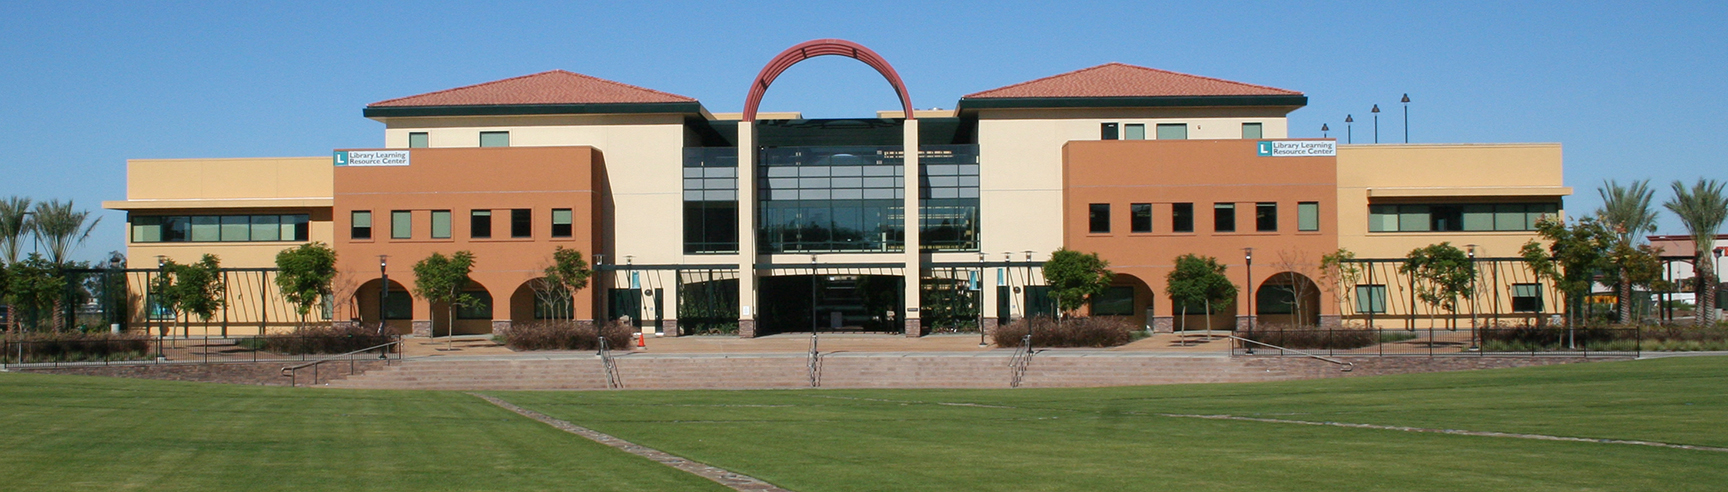 Miramar College library